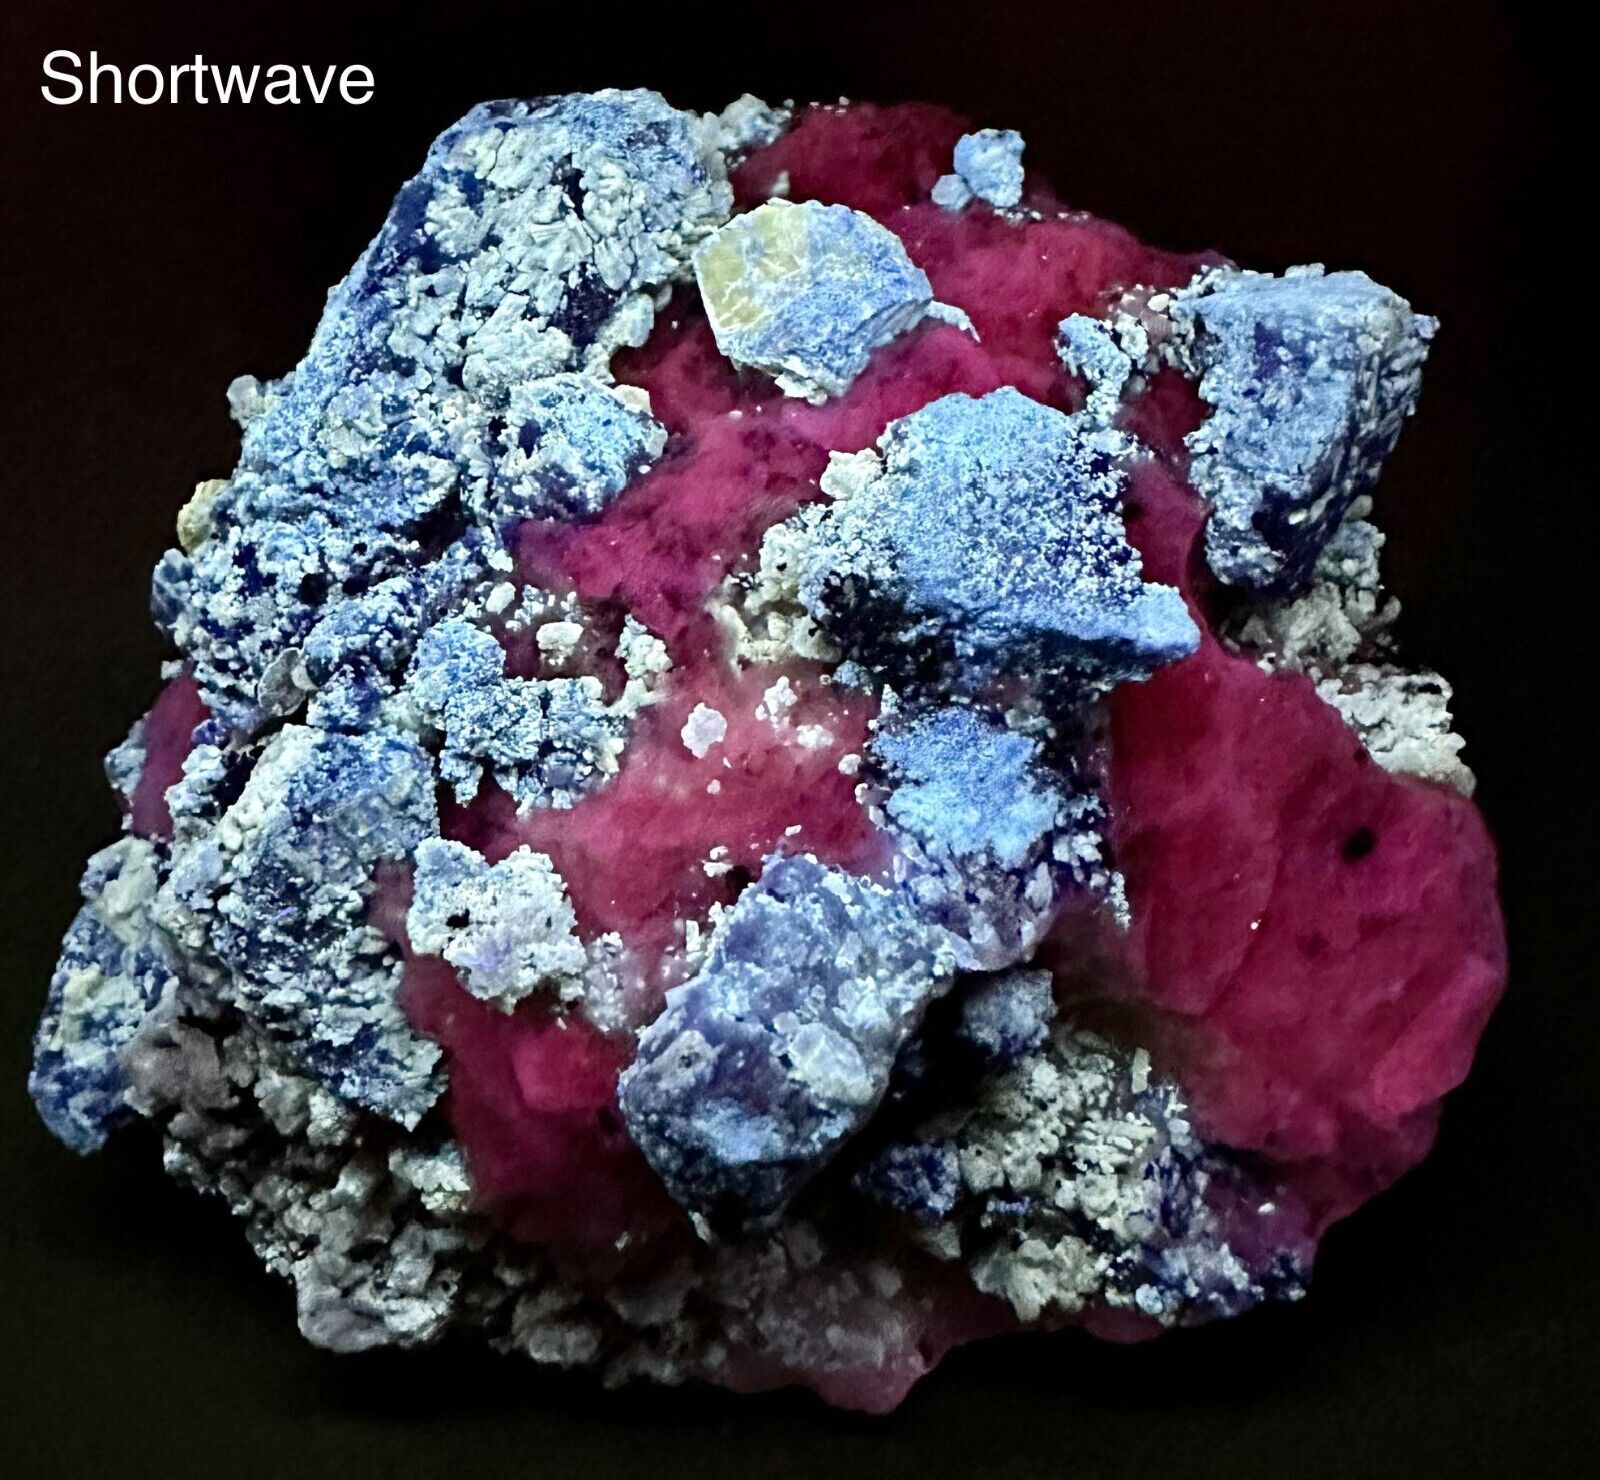 369 Gram Fluorescent Lazurite Coated Phlogopite, Diopside, Pyrites, Calcite Mtrx